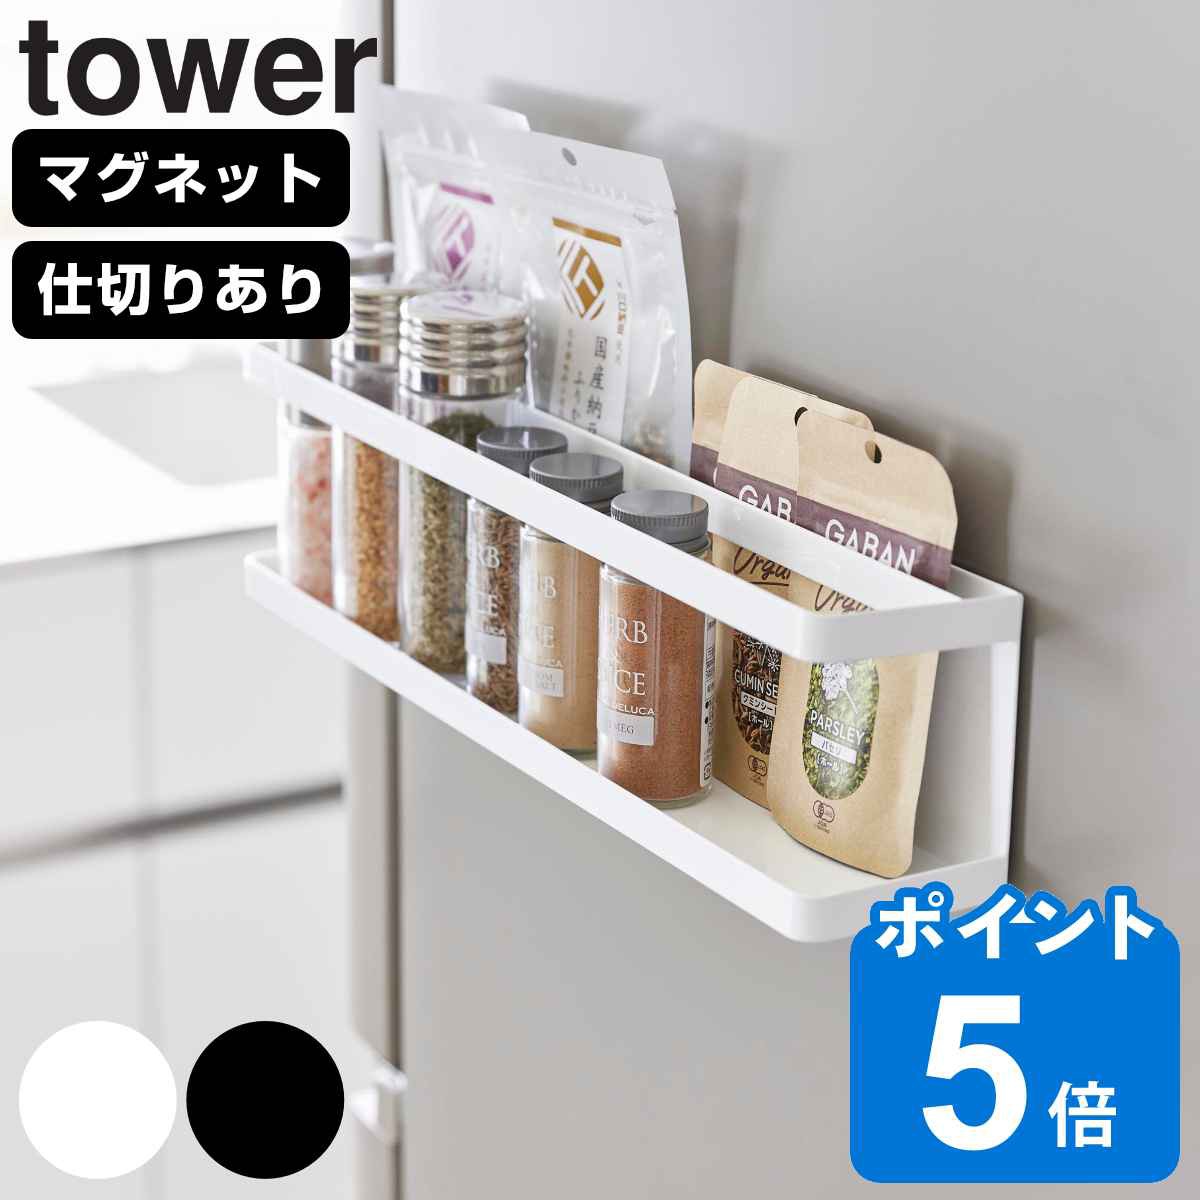 R tower }Olbg①ɉTvbN ^[